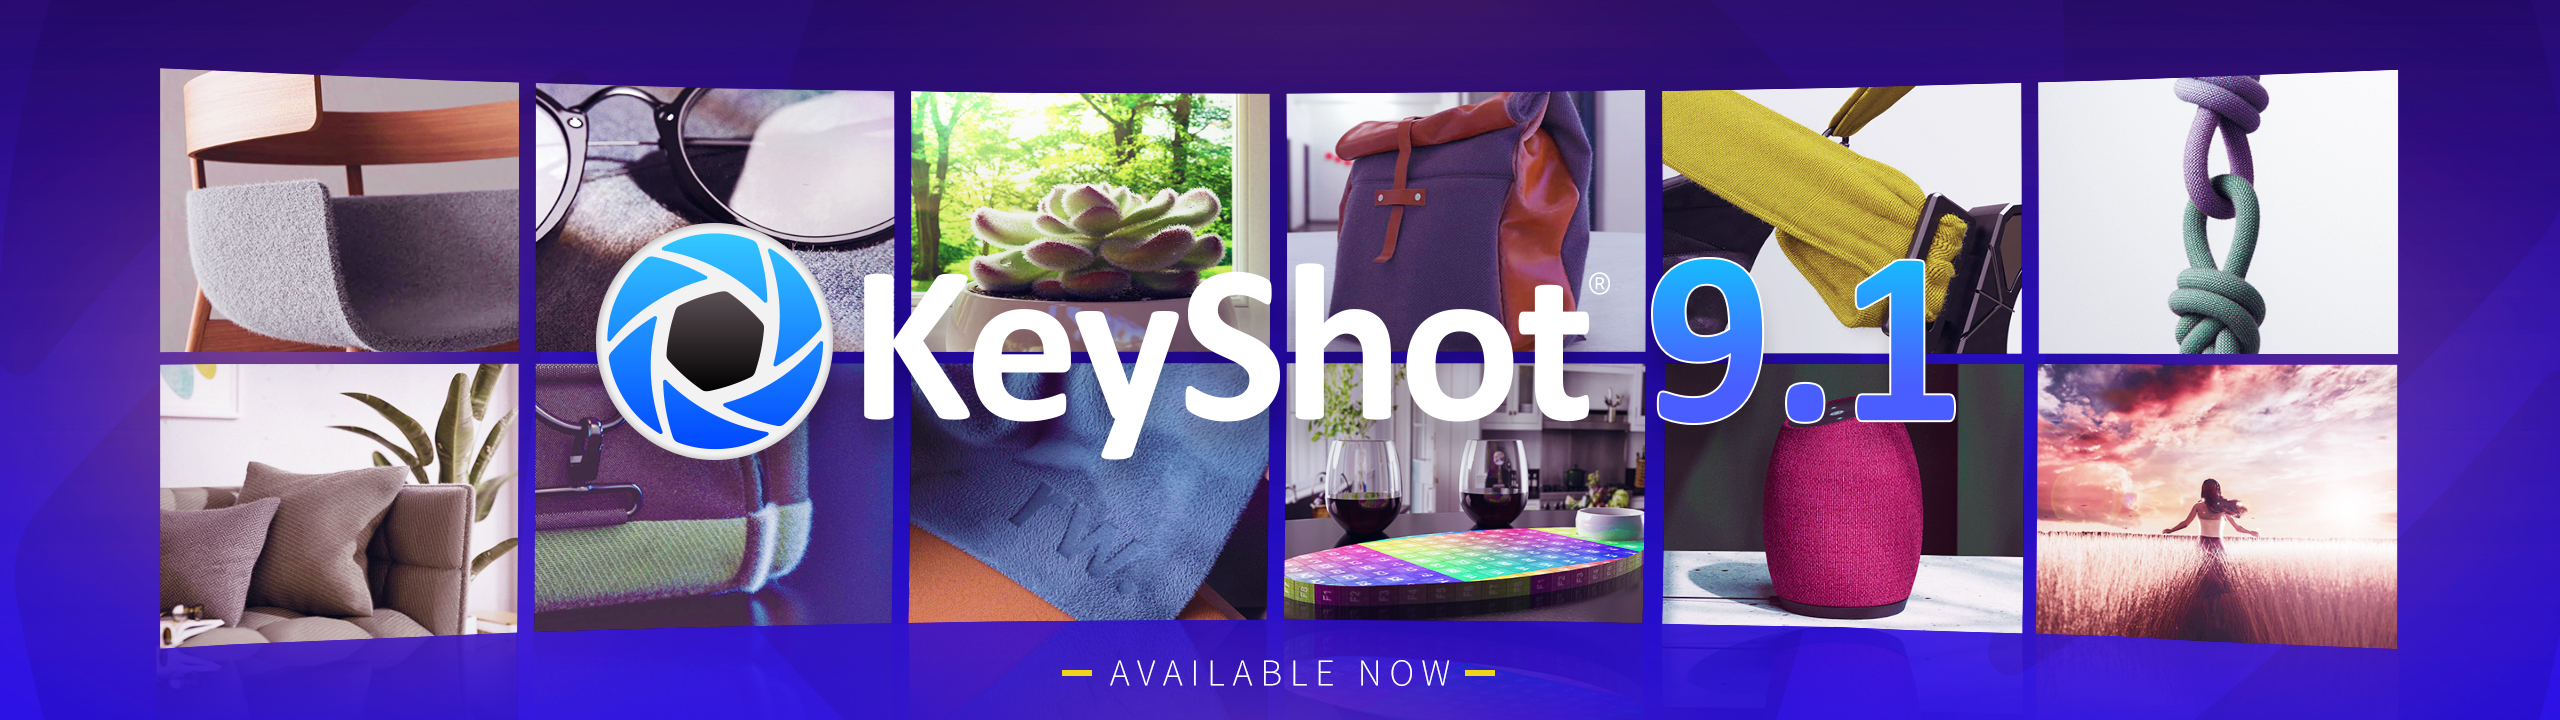 KeyShot 9.1 Now Available